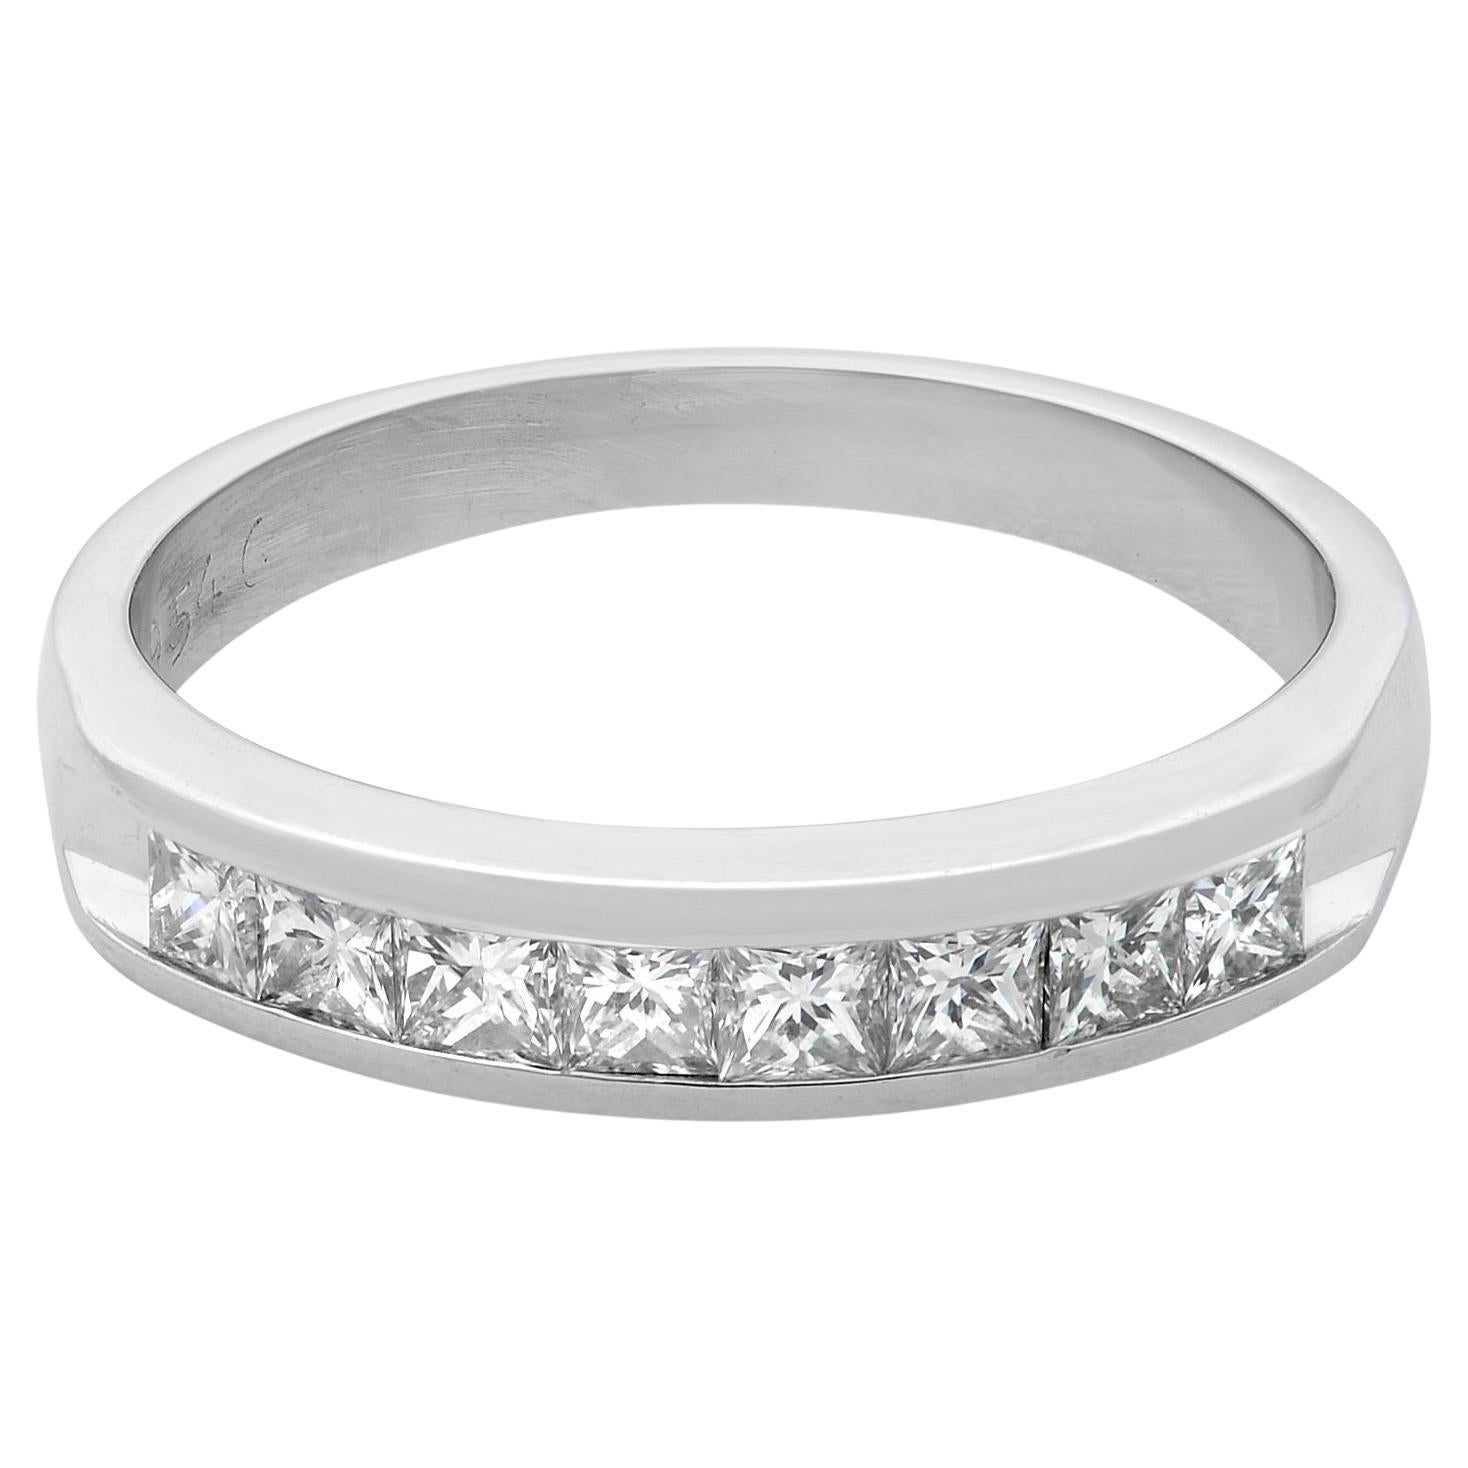 Rachel Koen Princess Cut Diamond Wedding Band Platinum 0.40Cttw Size 5.5